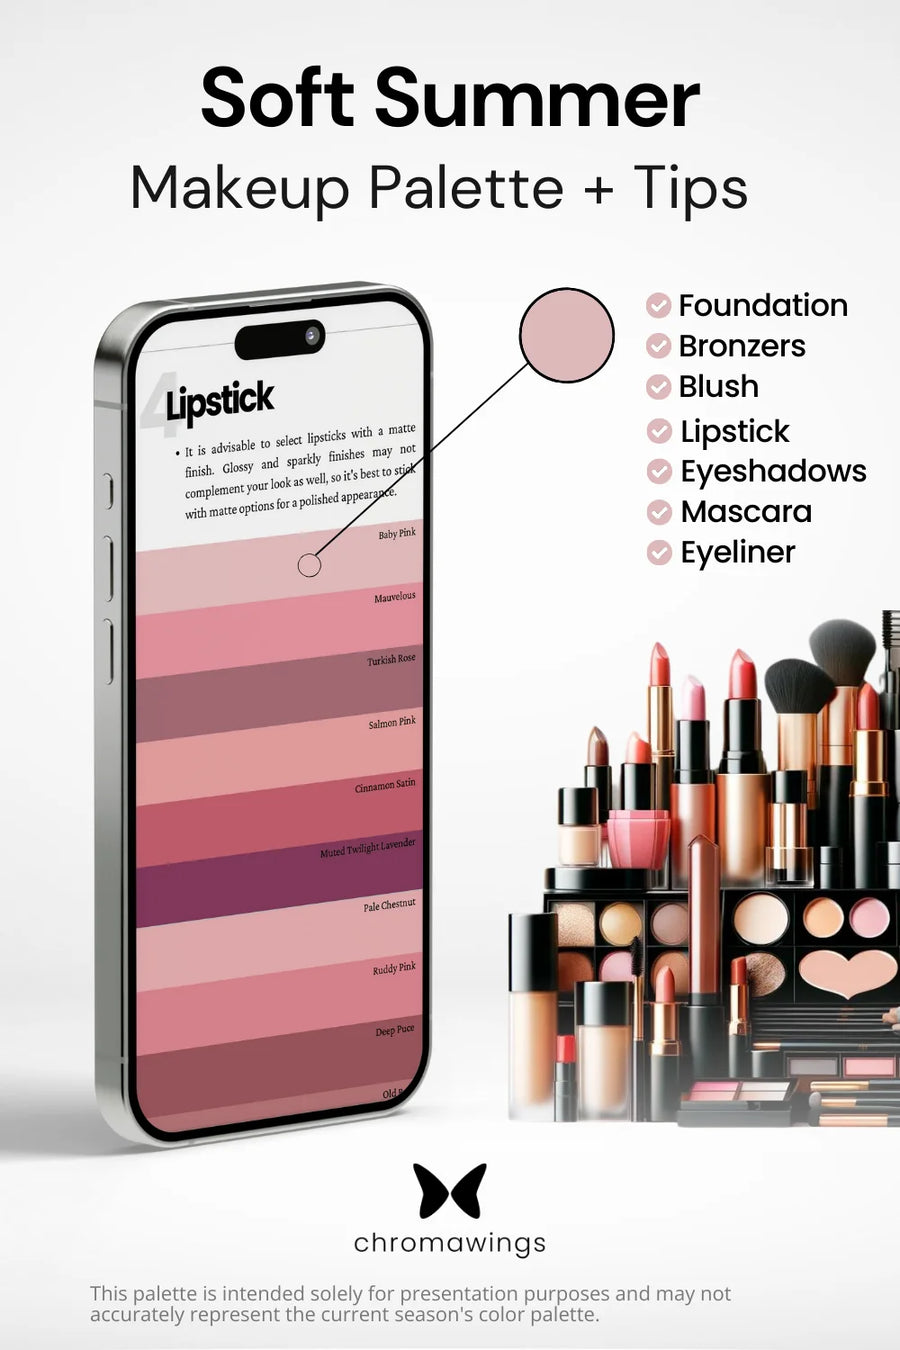 Soft Summer Makeup palette on phone, color pinpointed. Palette title, makeup types listed, shelf image.